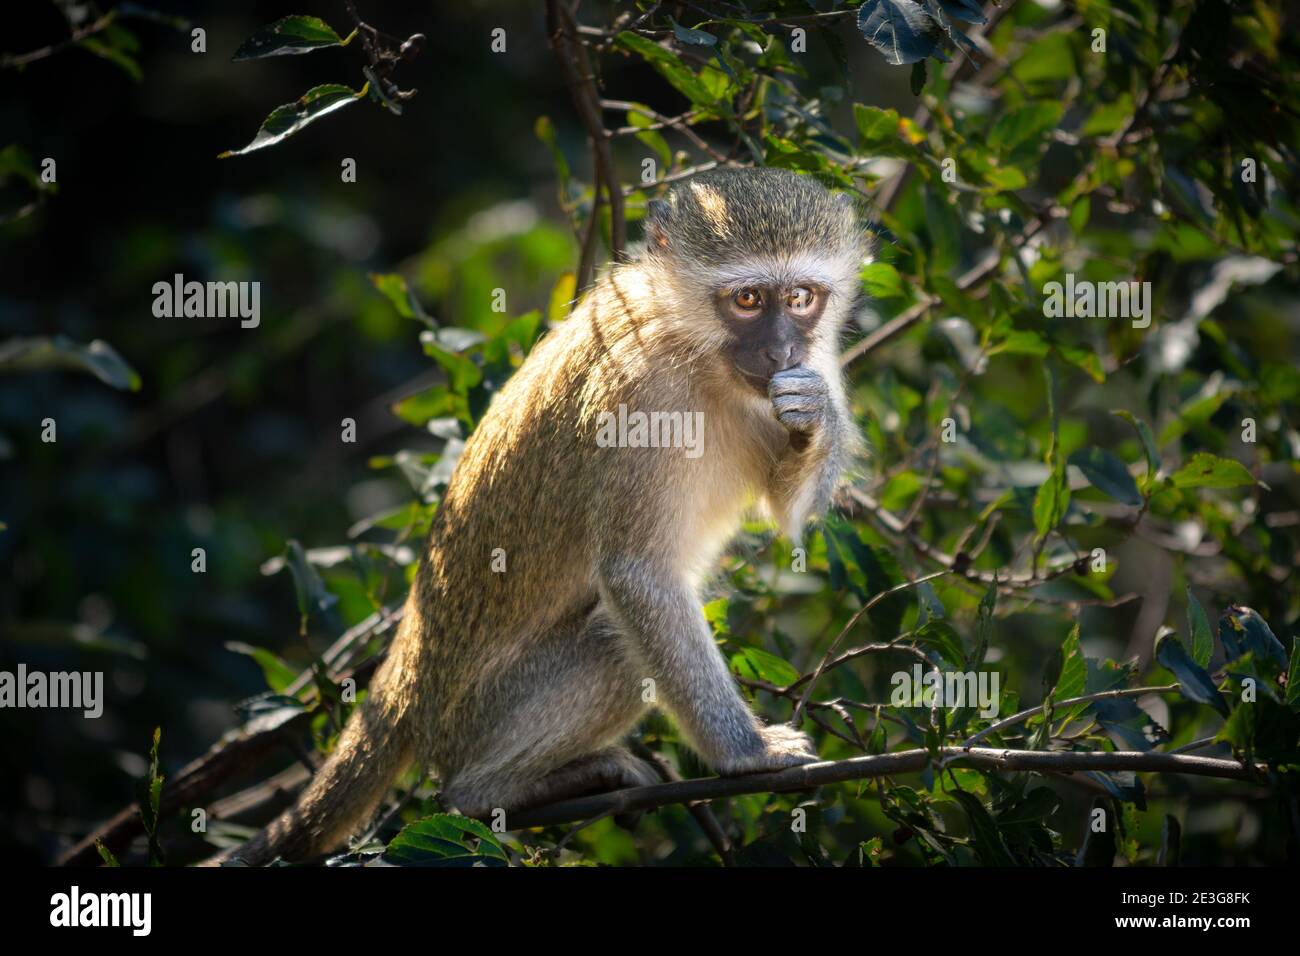 Wild Vervet Monkey in Africa. Stock Photo